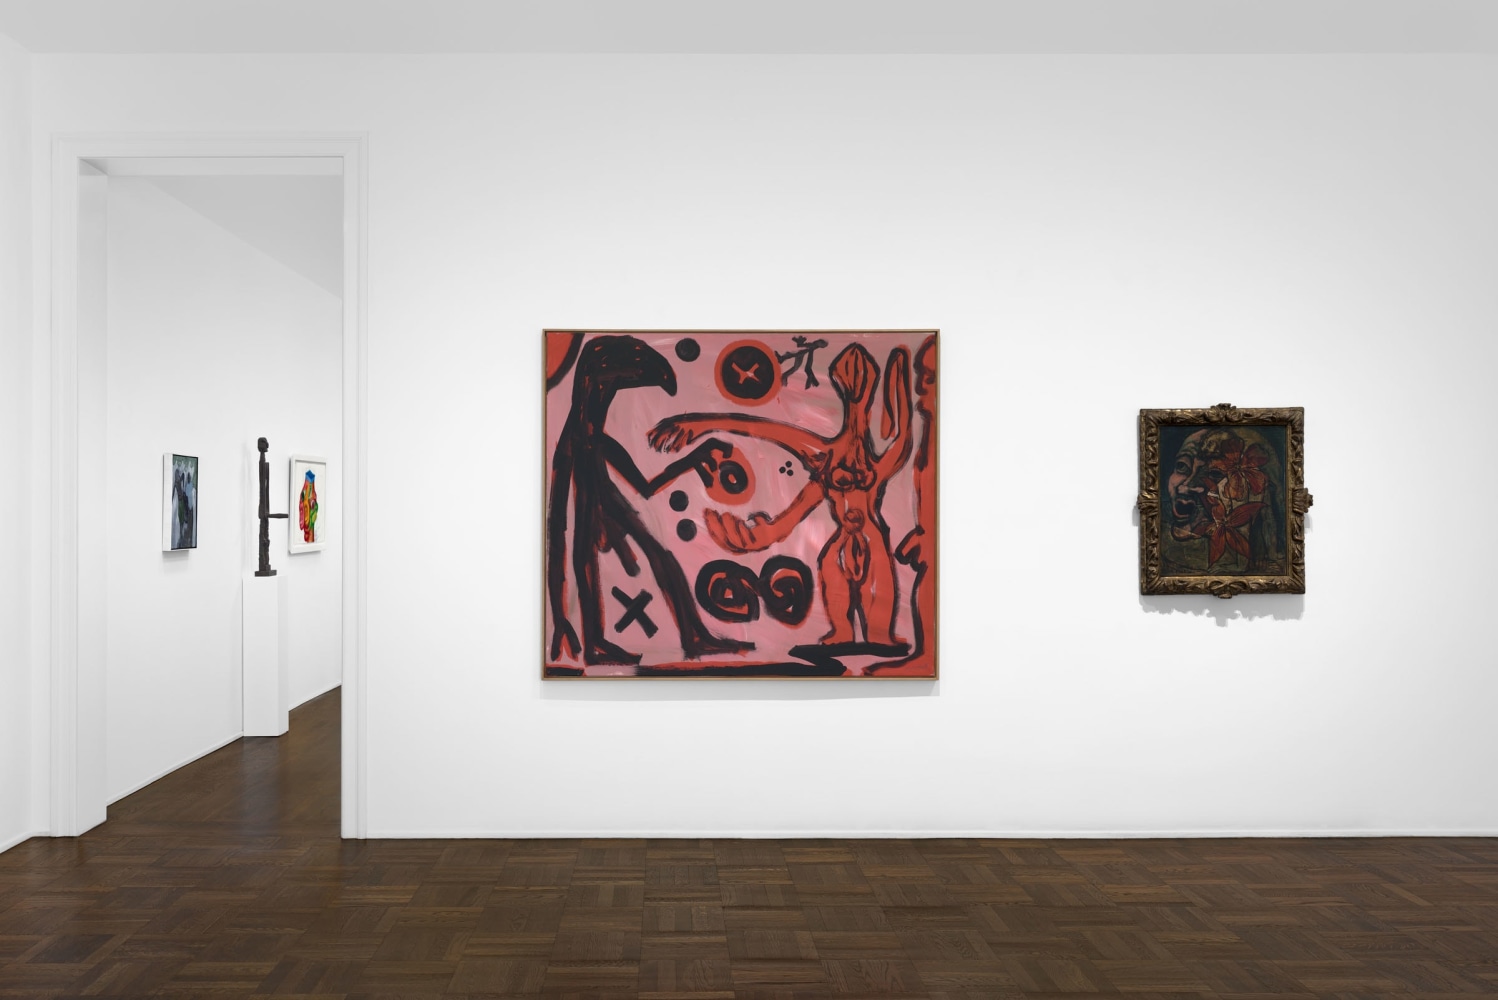 Installation view, Vile Bodies, Michael Werner Gallery, New York, 2018